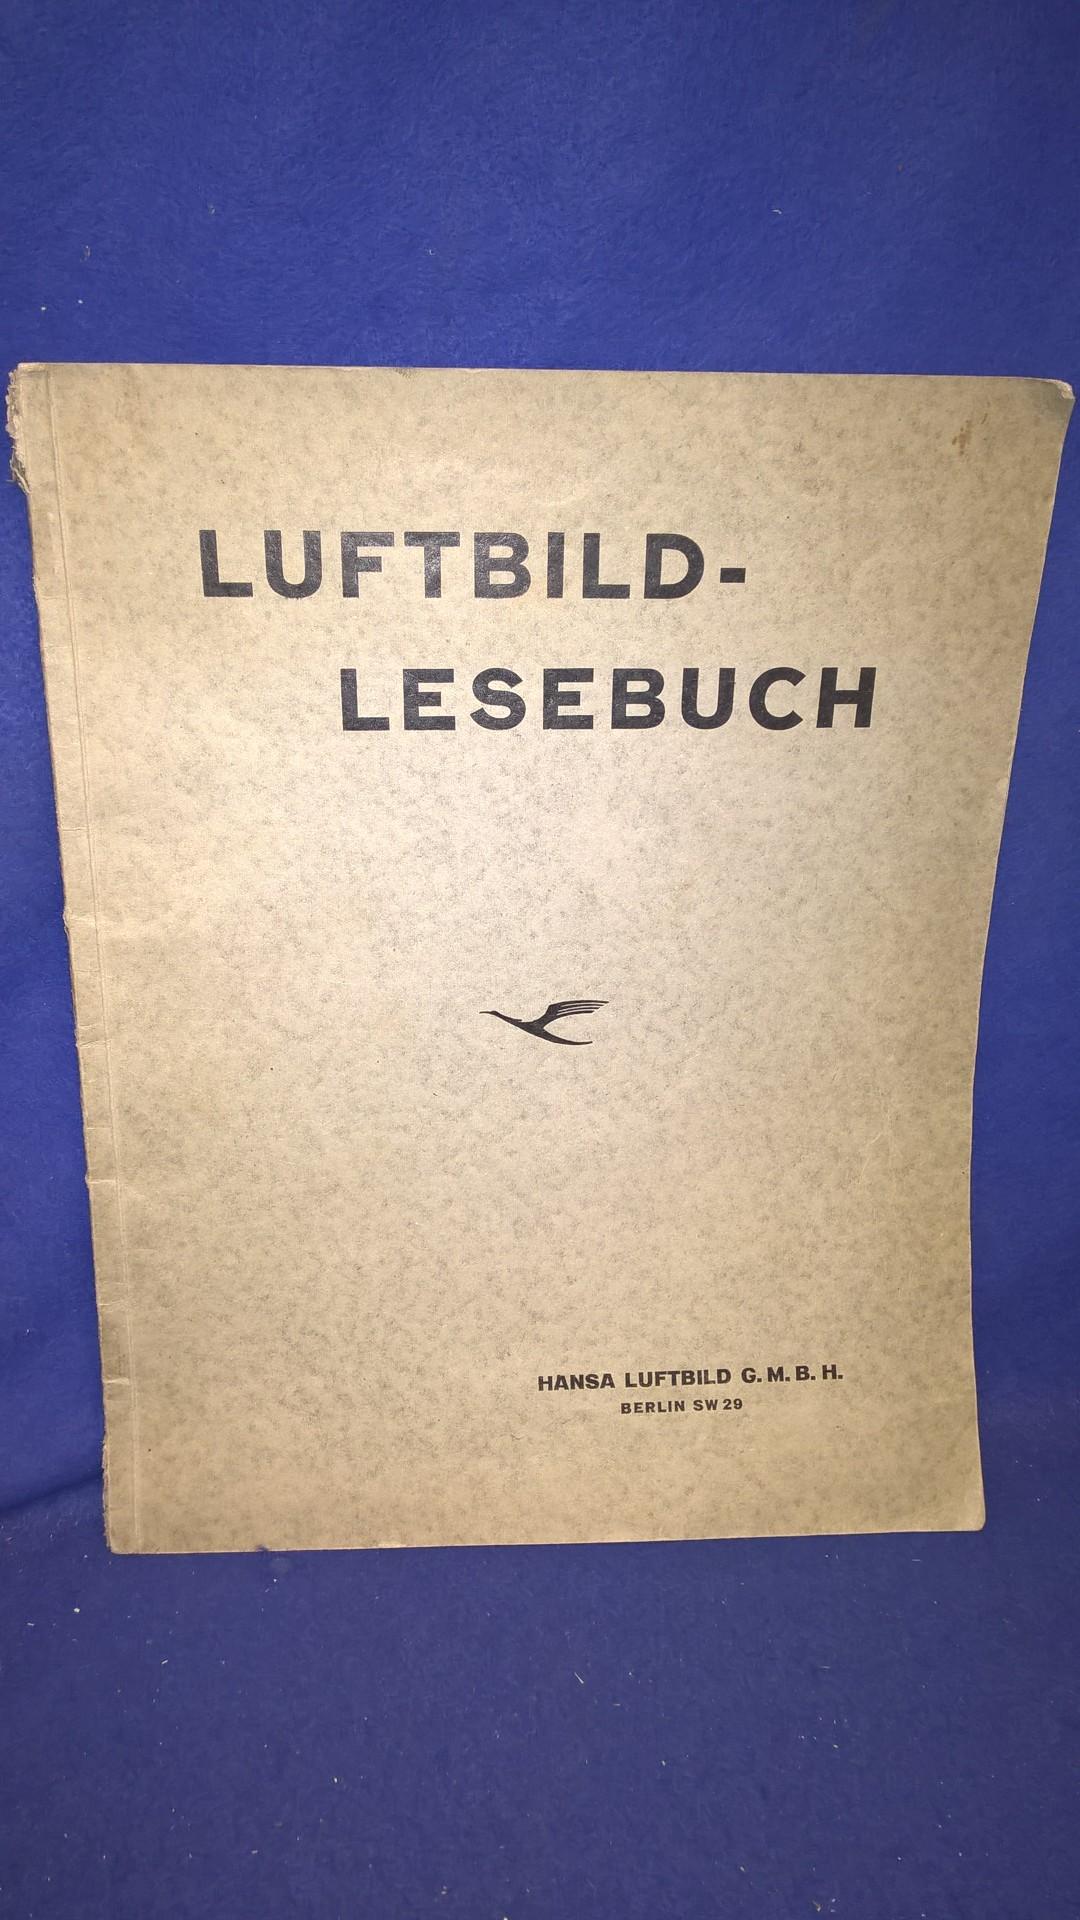 Luftbild-Lesebuch.